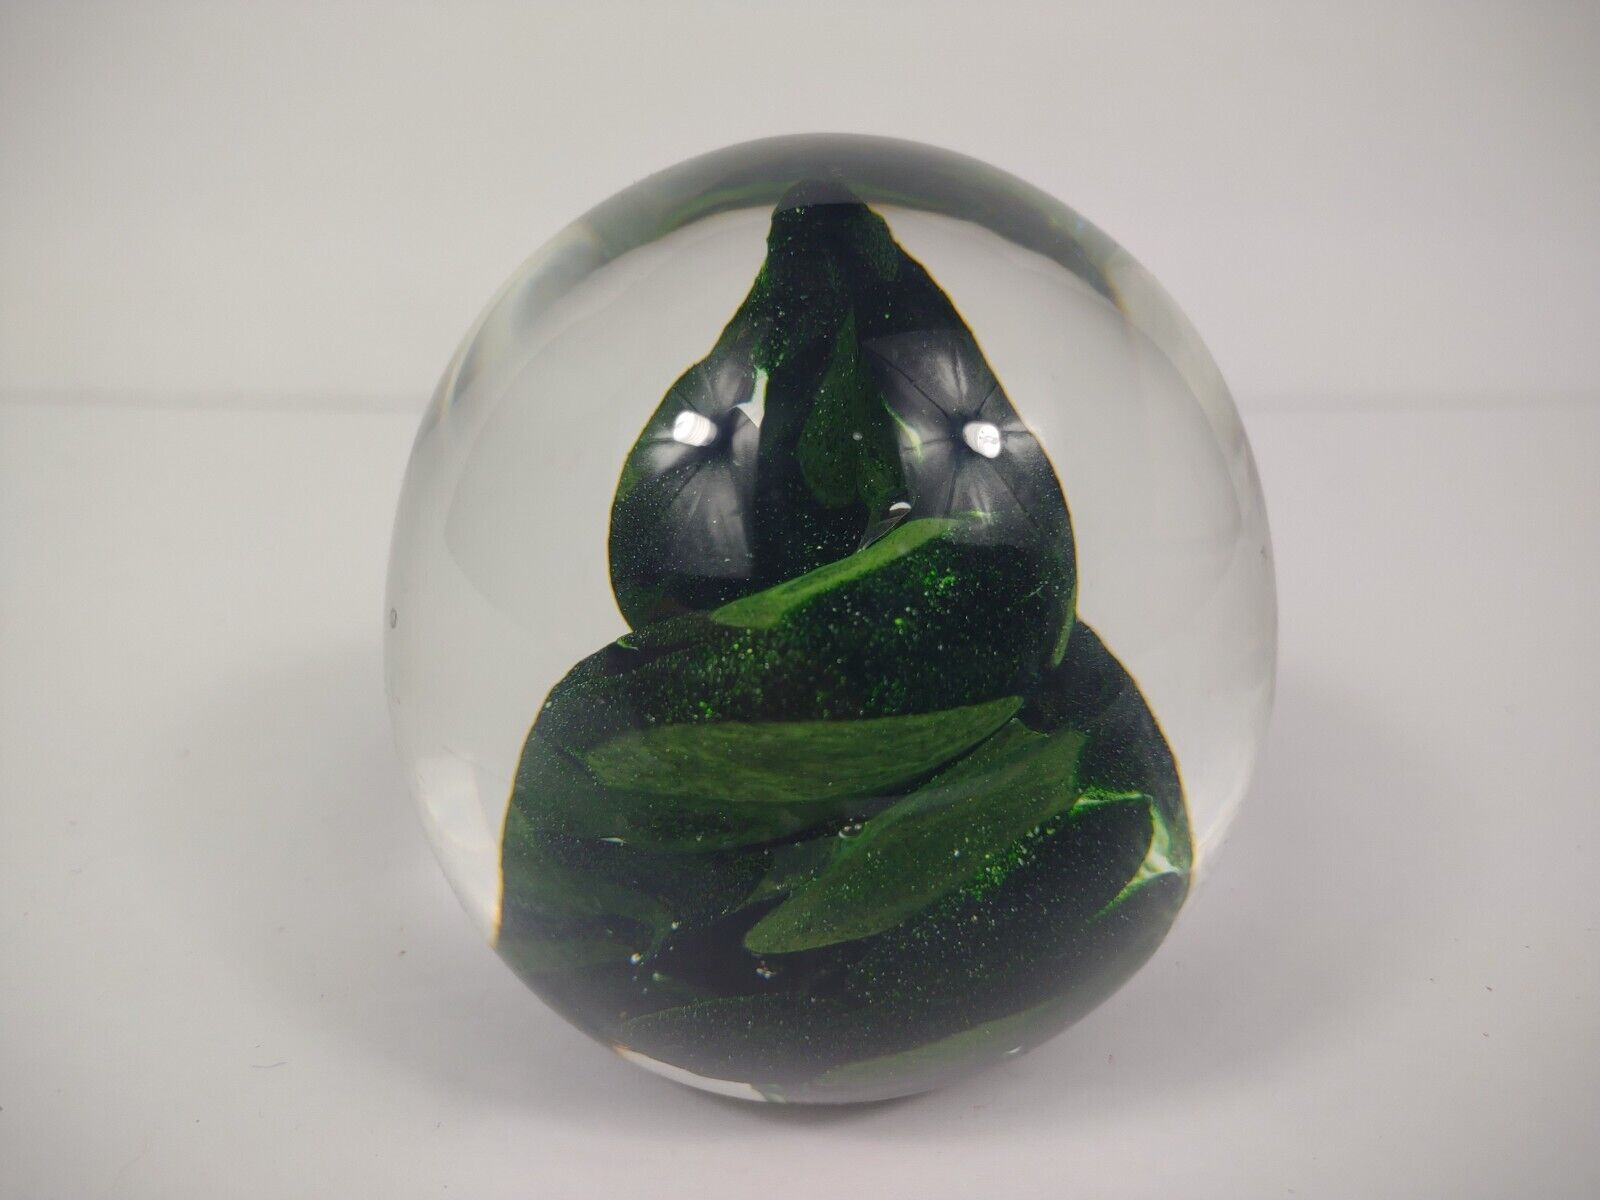 Vintage Titan 1998 Art Glass Paperweight Green Swirl Flecks Round Orb signed